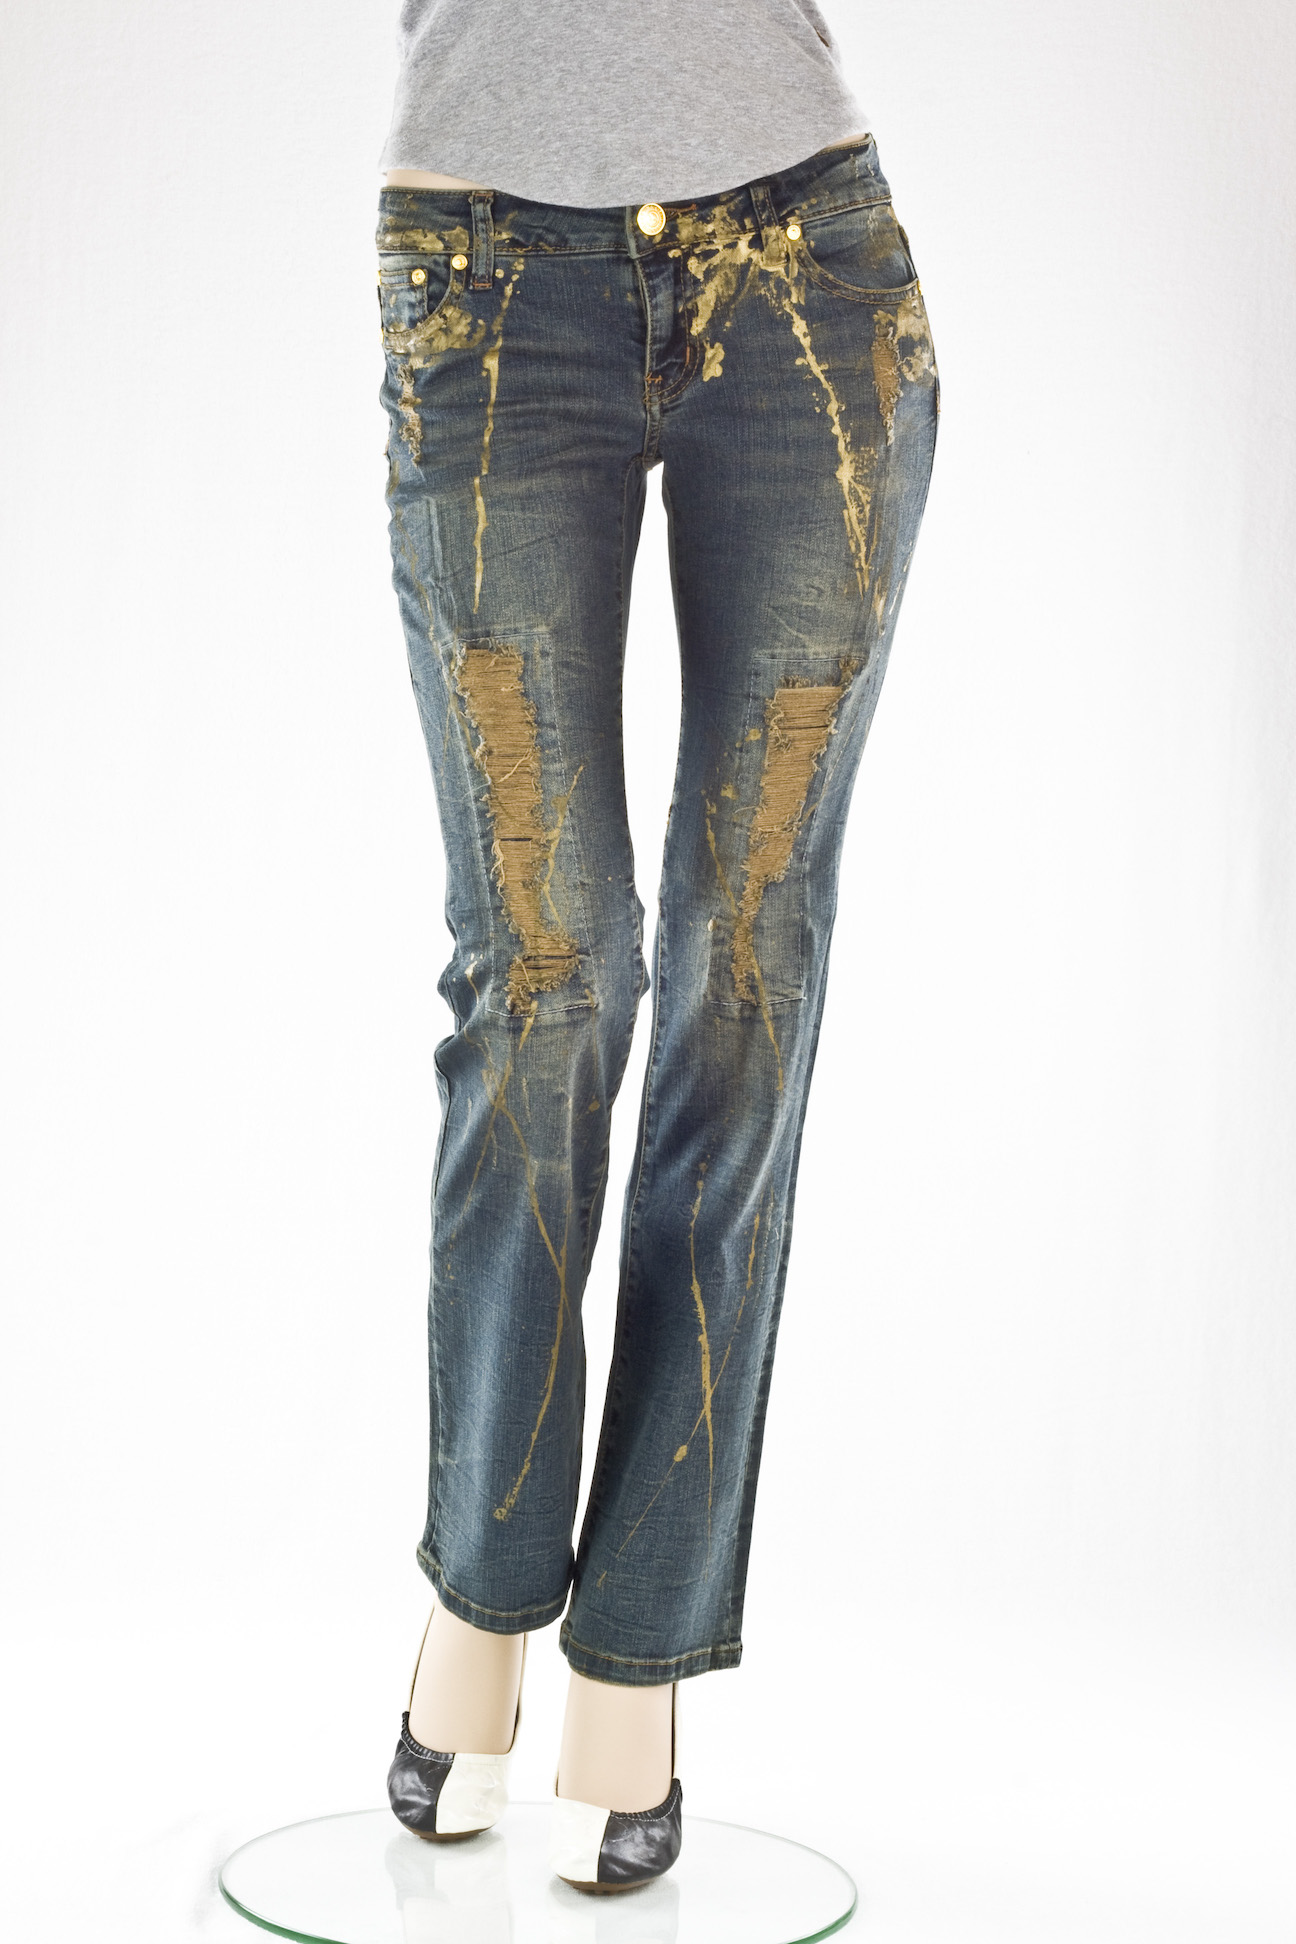 Женские джинсы VO Jeans LA винтажные "Буткат" Desrtoyed Bootcut jeans vintage интернет-магазин Fashion Jeans